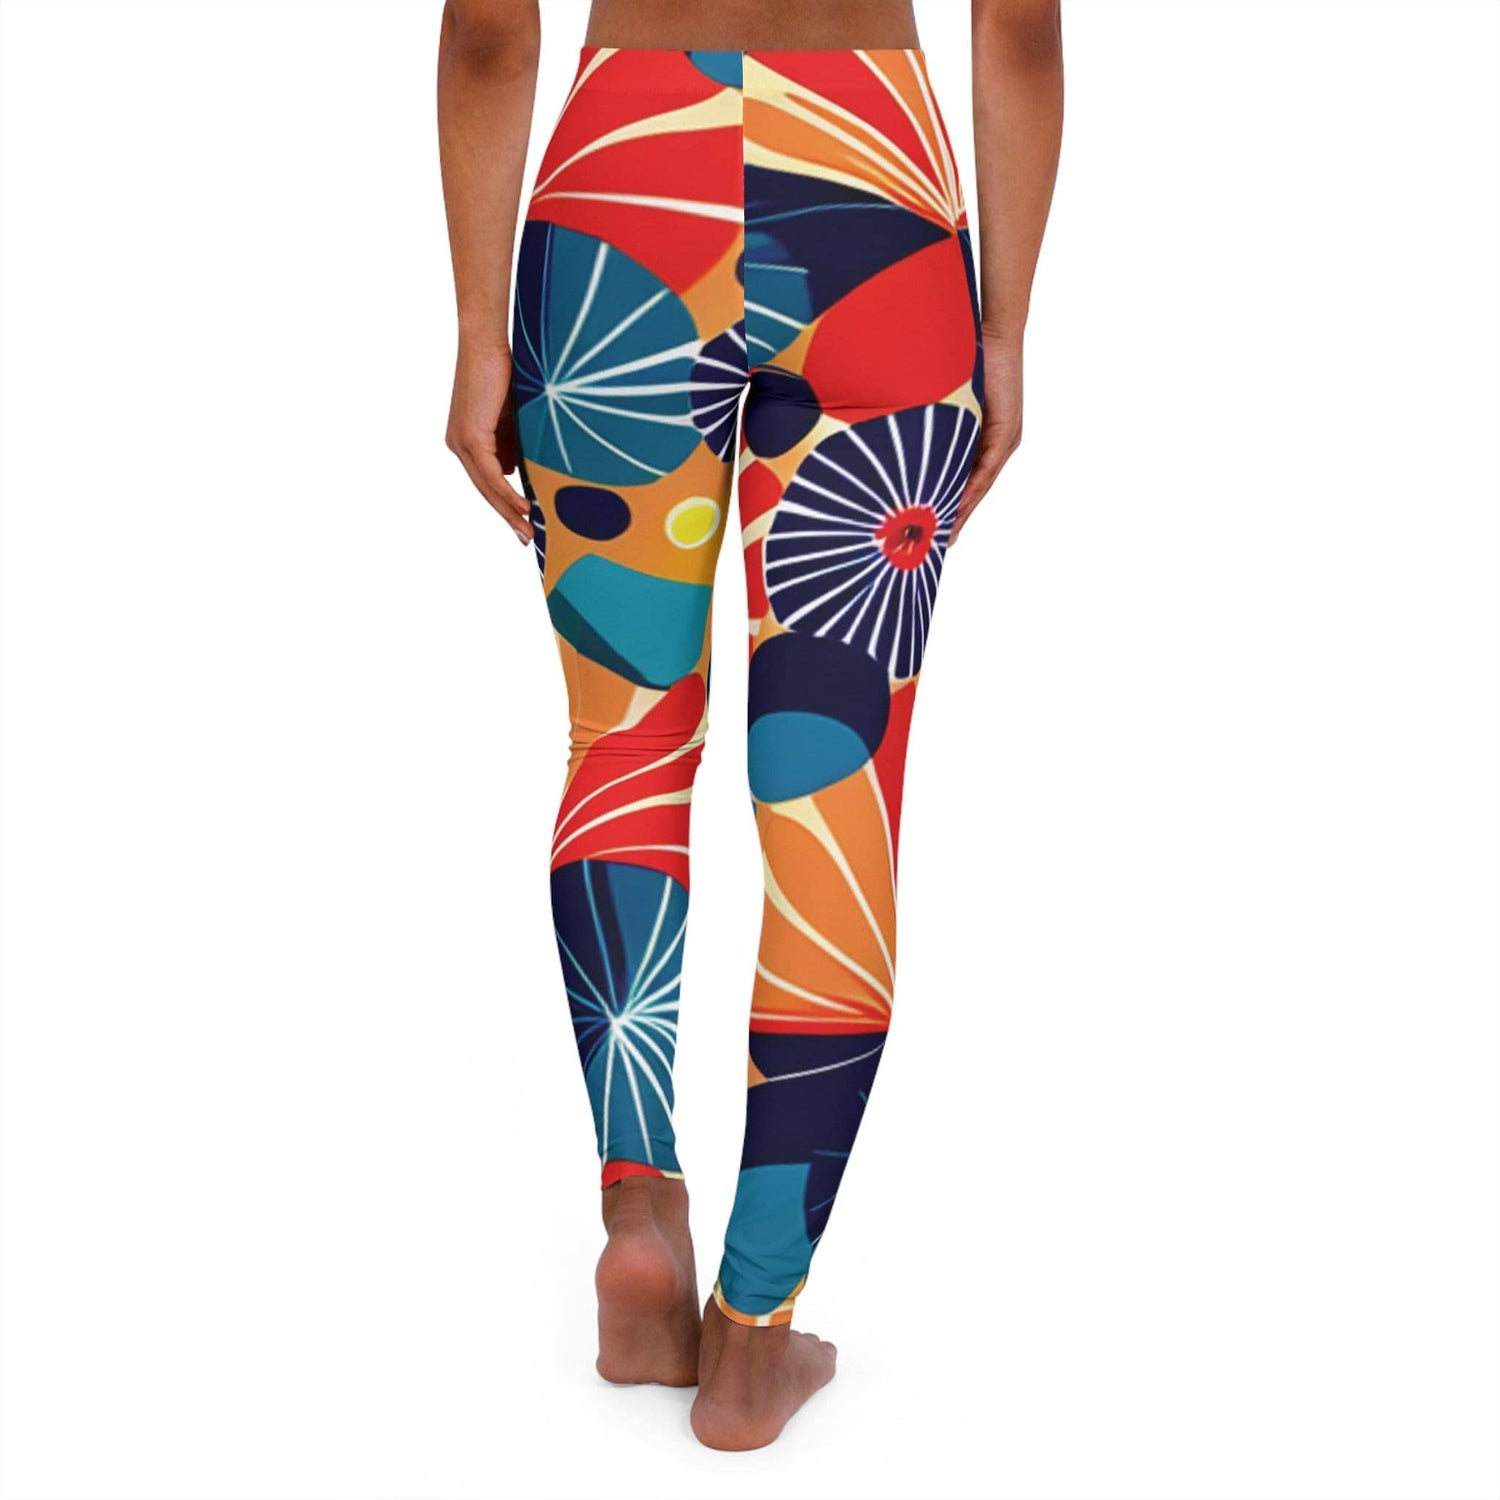 Kate McEnroe New York Retro Geometric Pattern Leggings - Stretchy Skinny Fit with Bold Mid - Century ColorsLeggings25067179675775556342